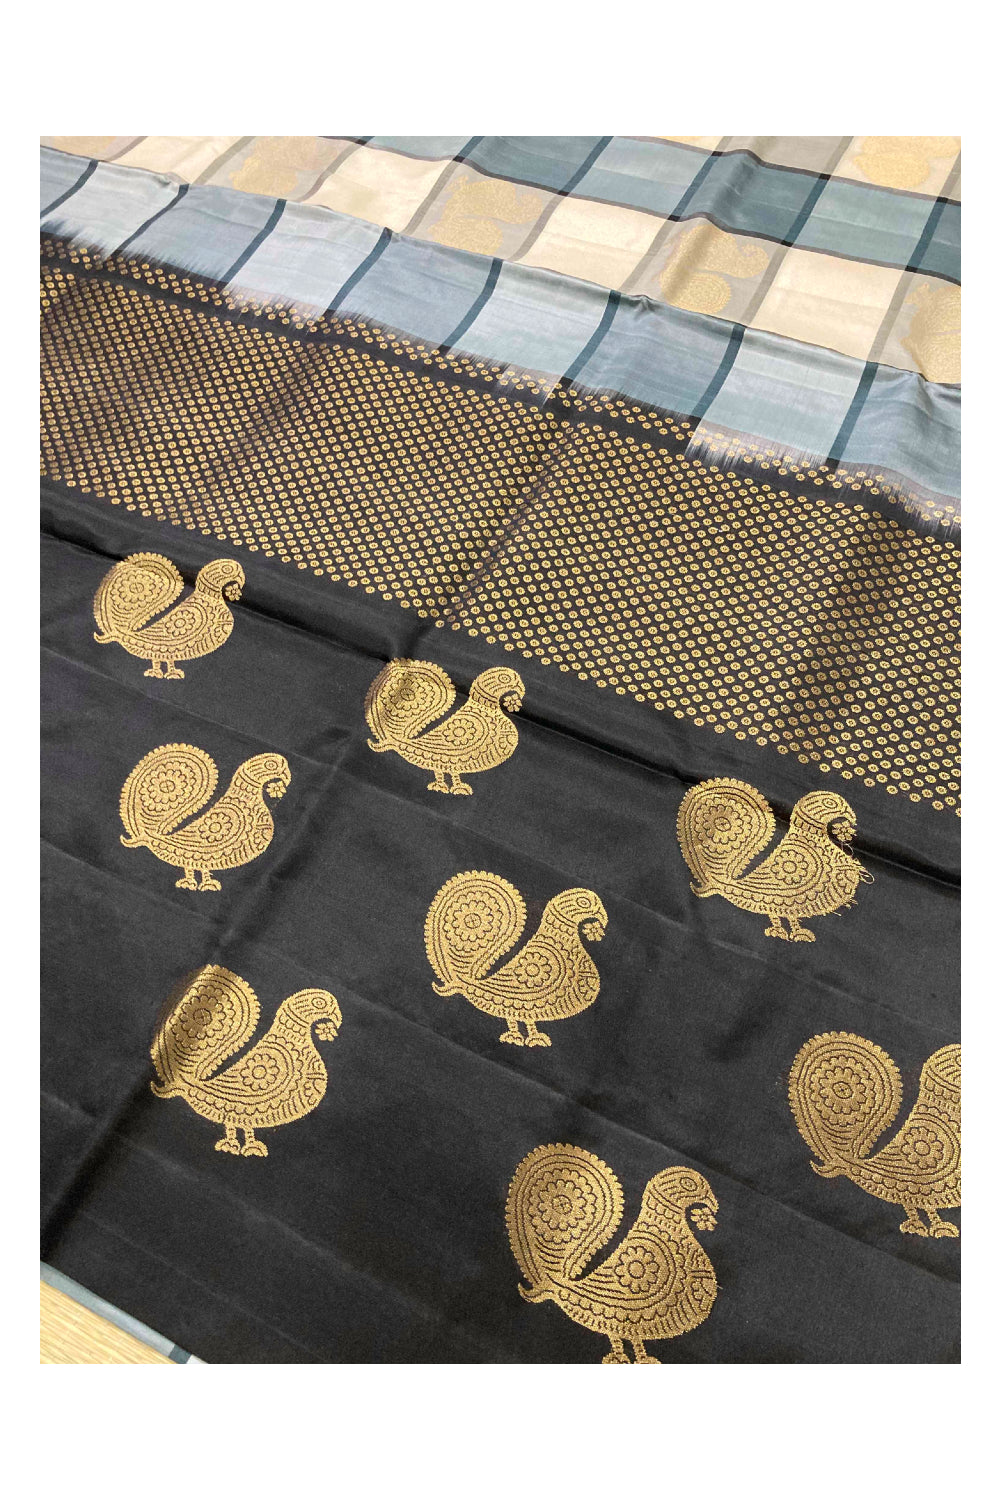 Southloom Handloom Pure Silk Kanchipuram Saree in Cream and Grey Check Box Design with Peacock Motifs